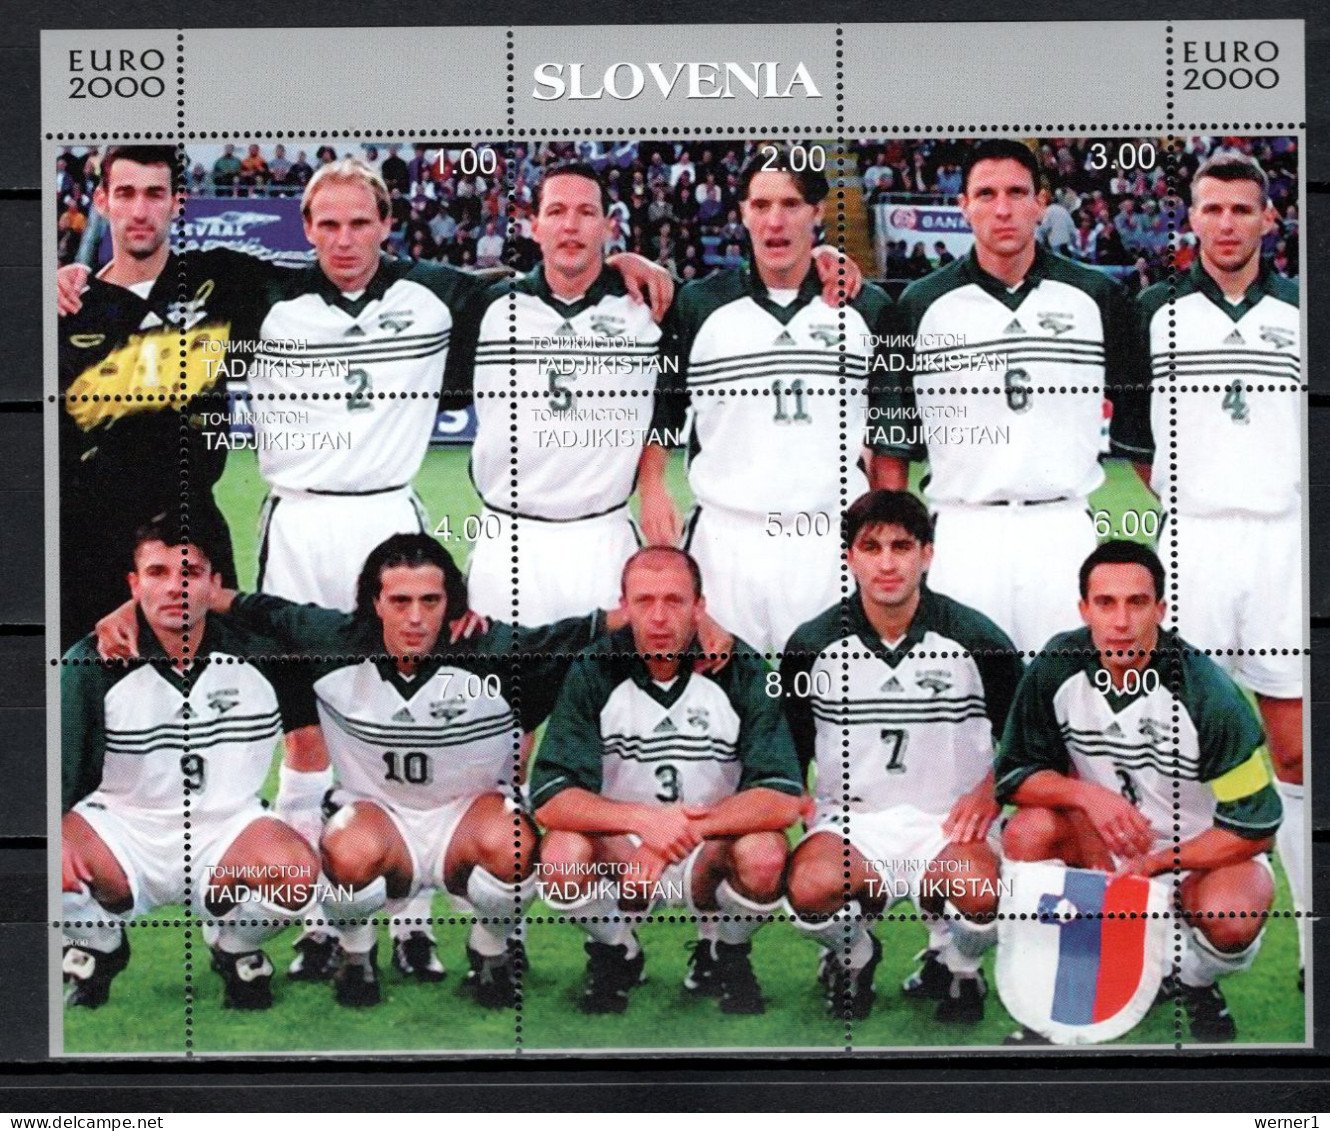 Tadzikistan 2000 Football Soccer European Championship, Sheetlet With Slovenia Team MNH - Europees Kampioenschap (UEFA)